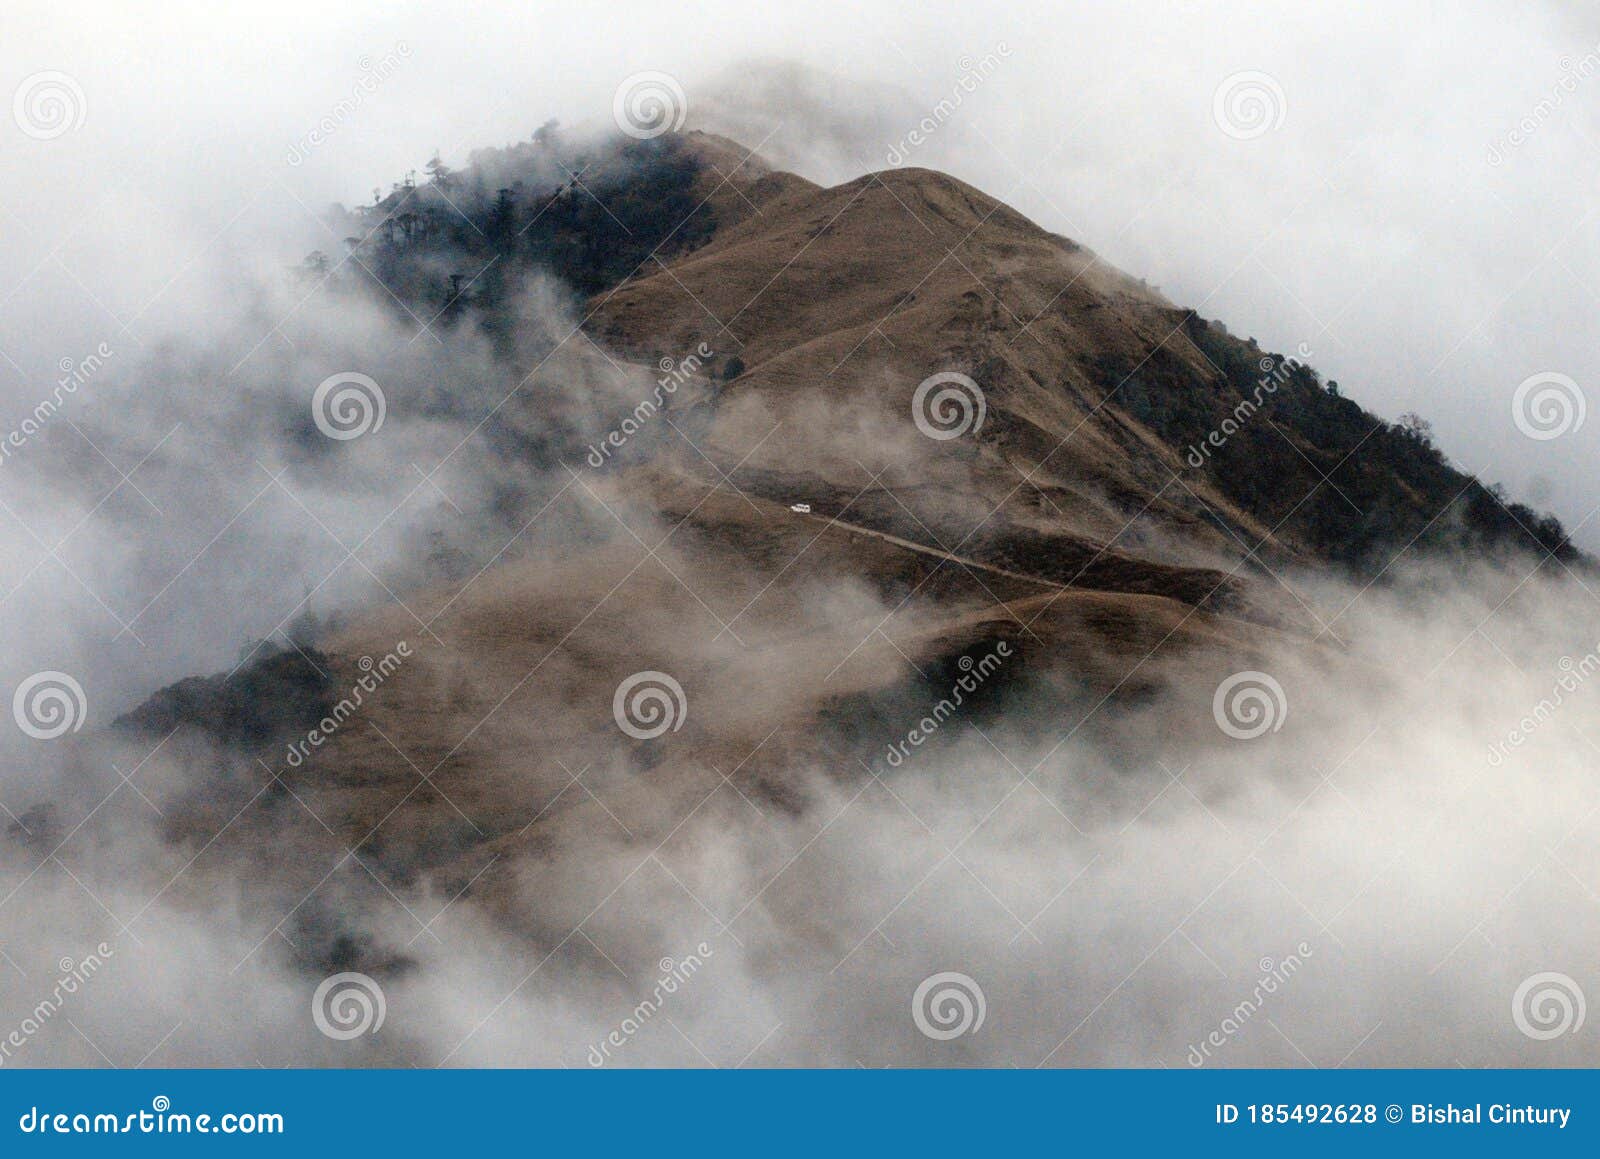 mist and fog engulfed mountain terrian